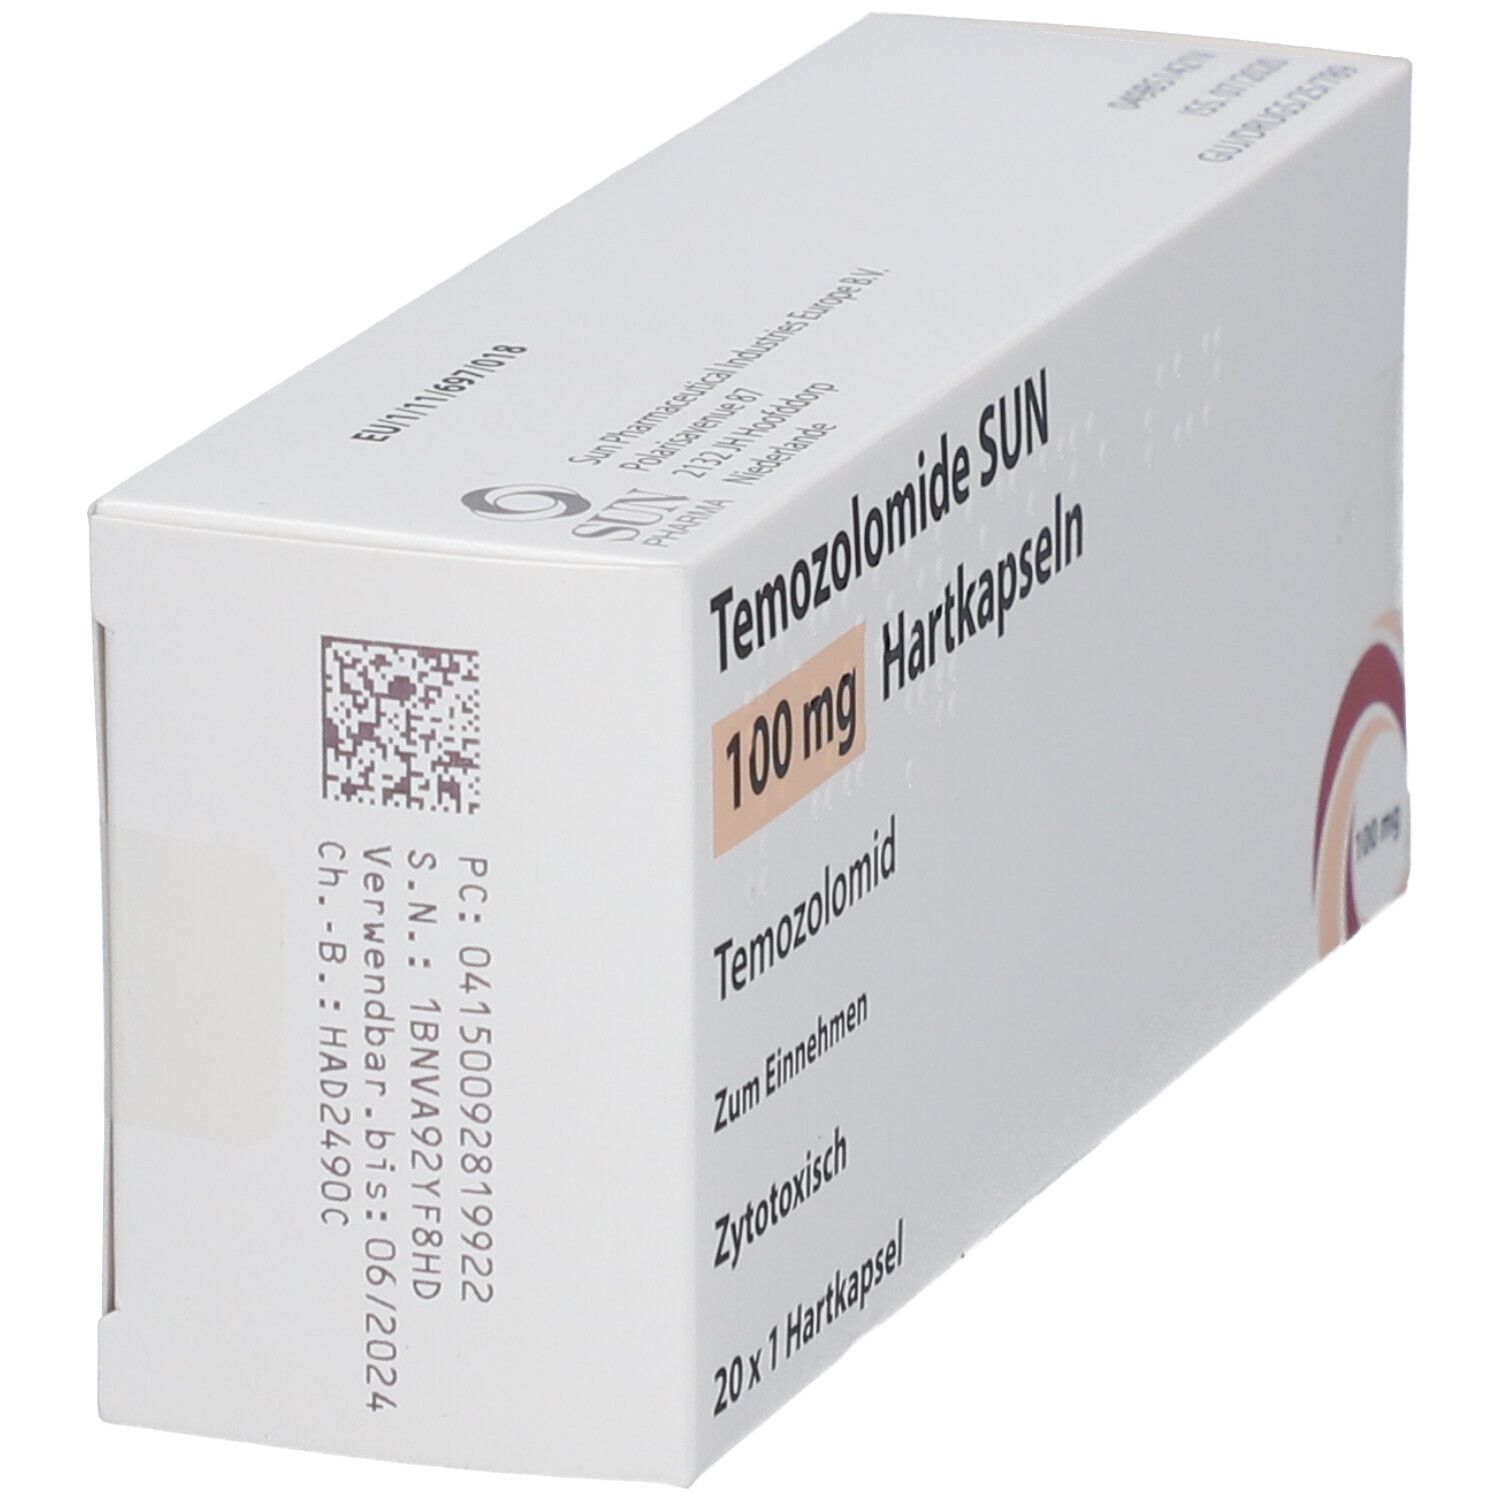 Temozolomide SUN 100 mg